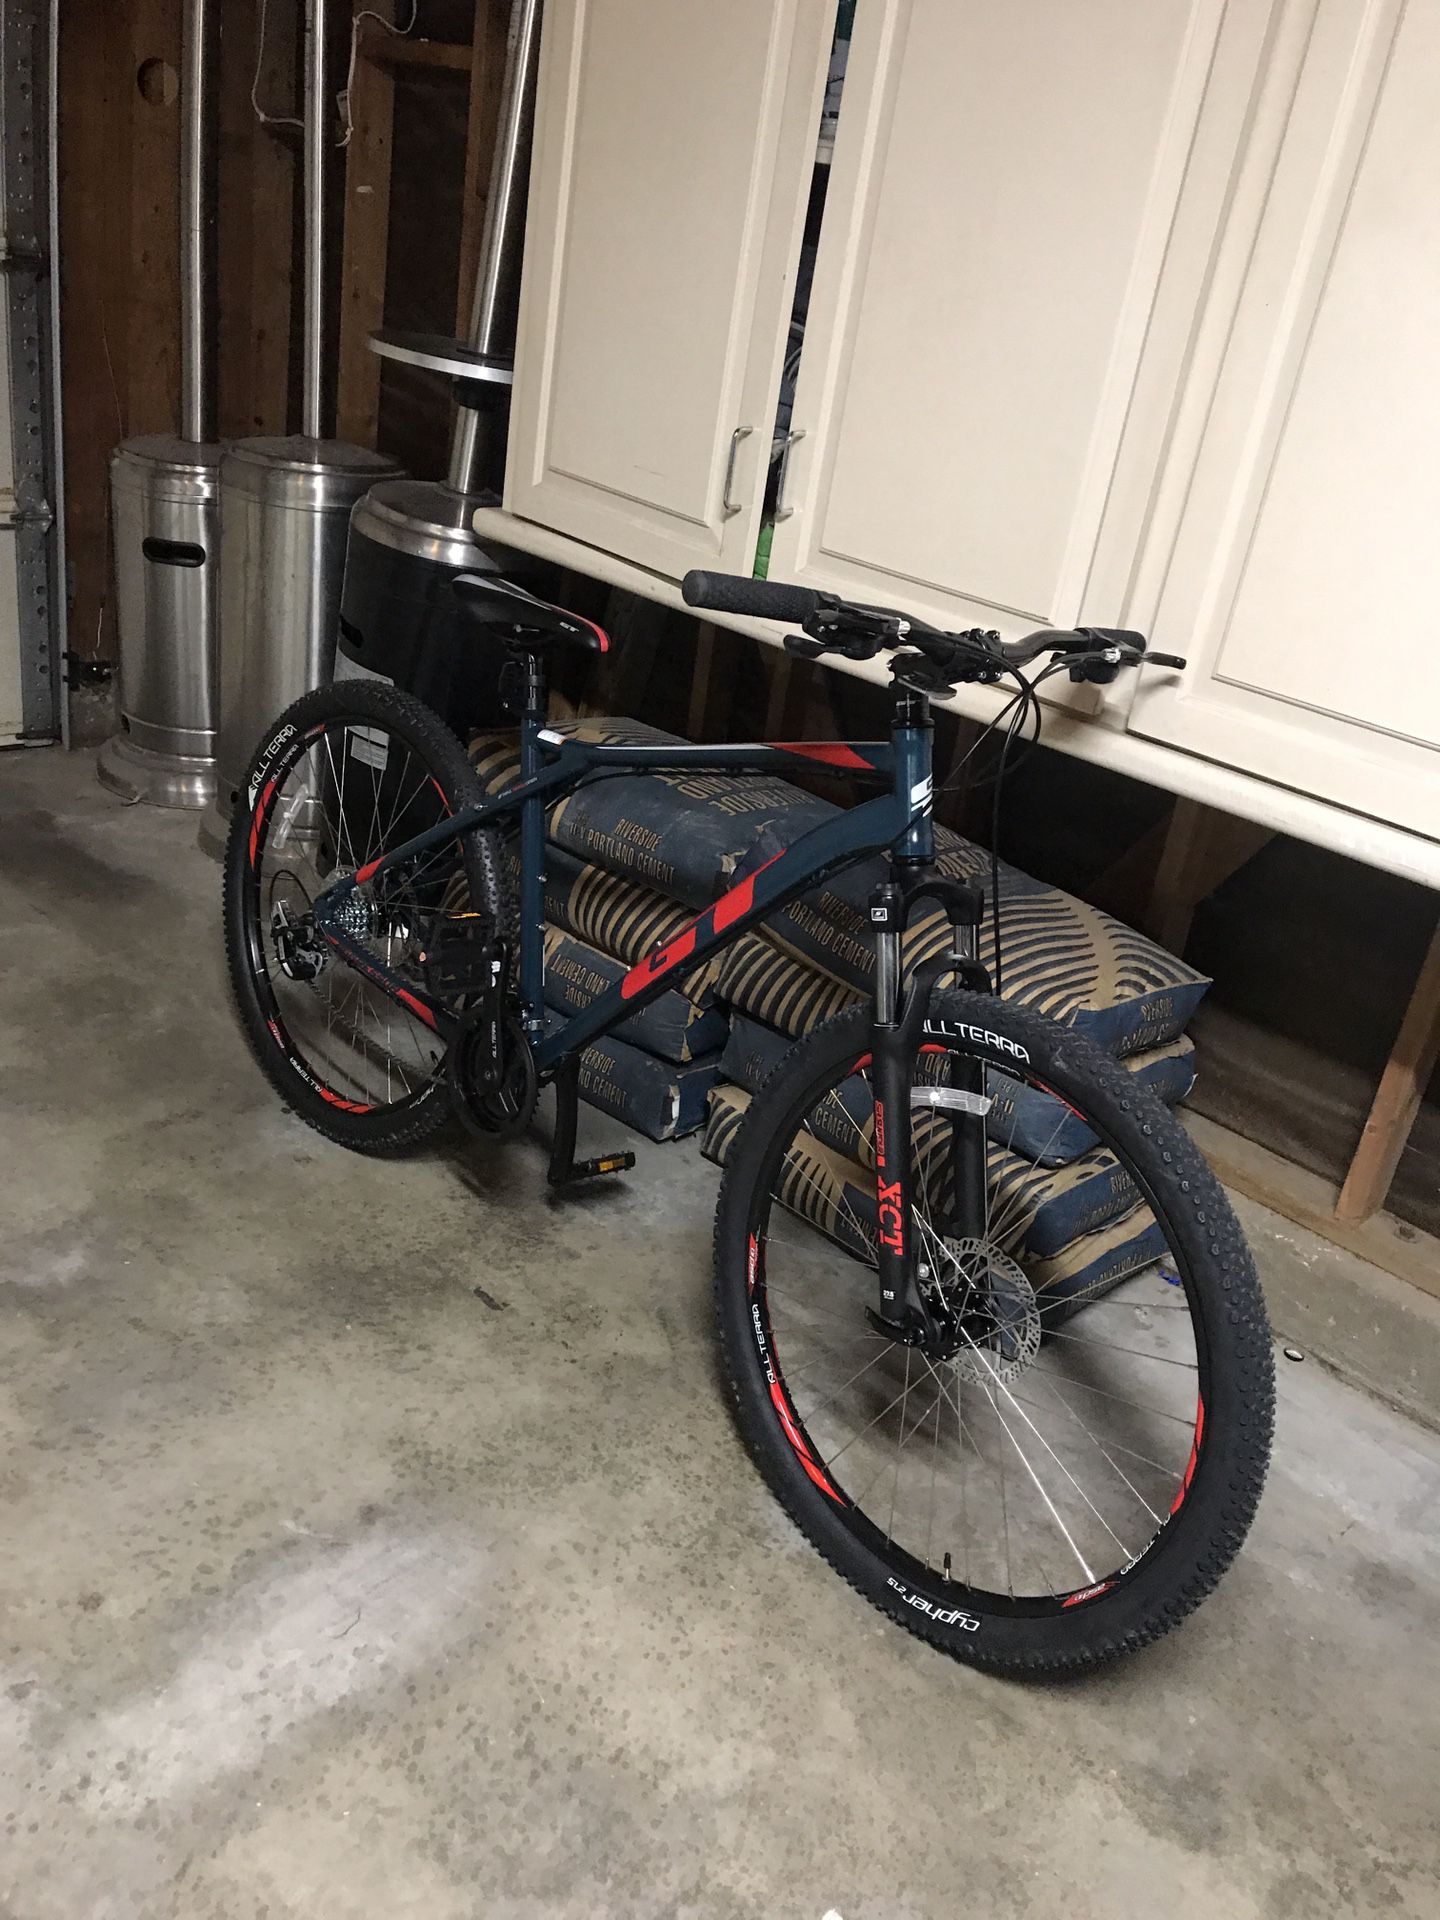 2018 Gt agresor mountain bike. Only used twice